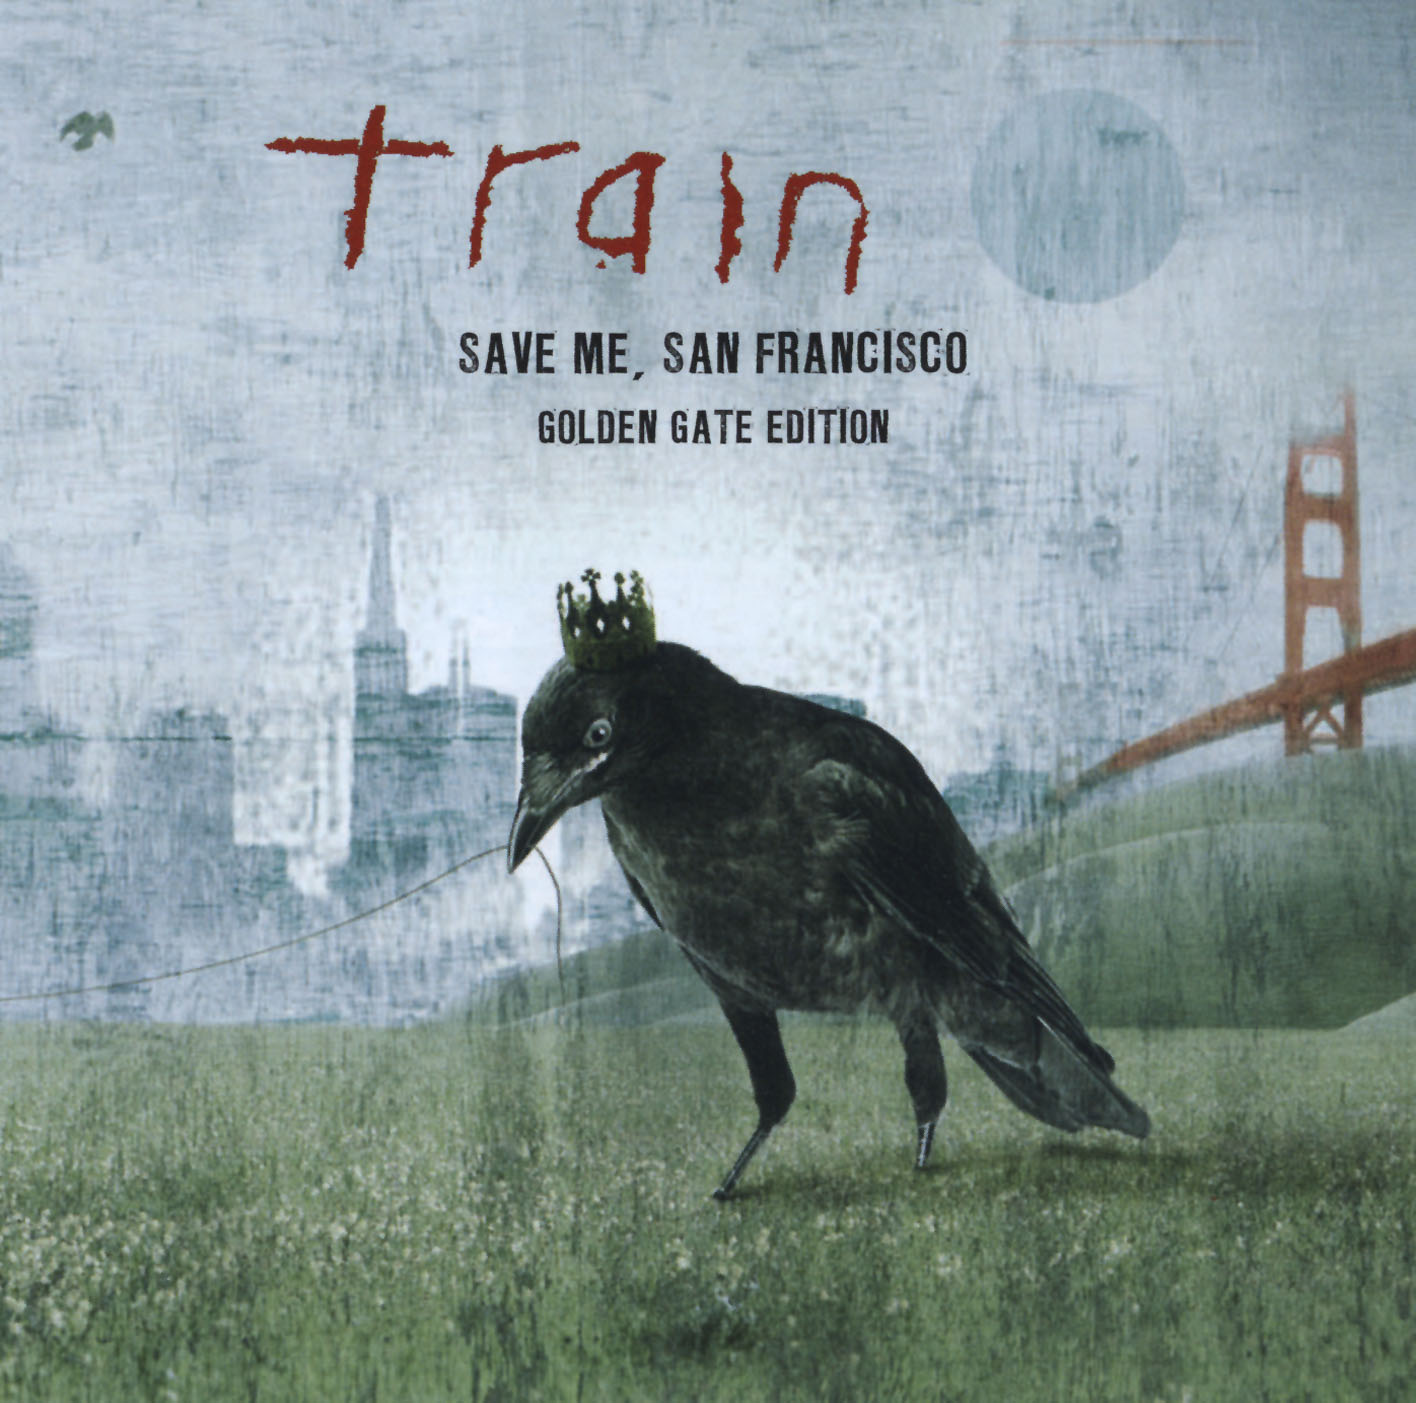 Save Me, San Francisco (Golden Gate Edition)